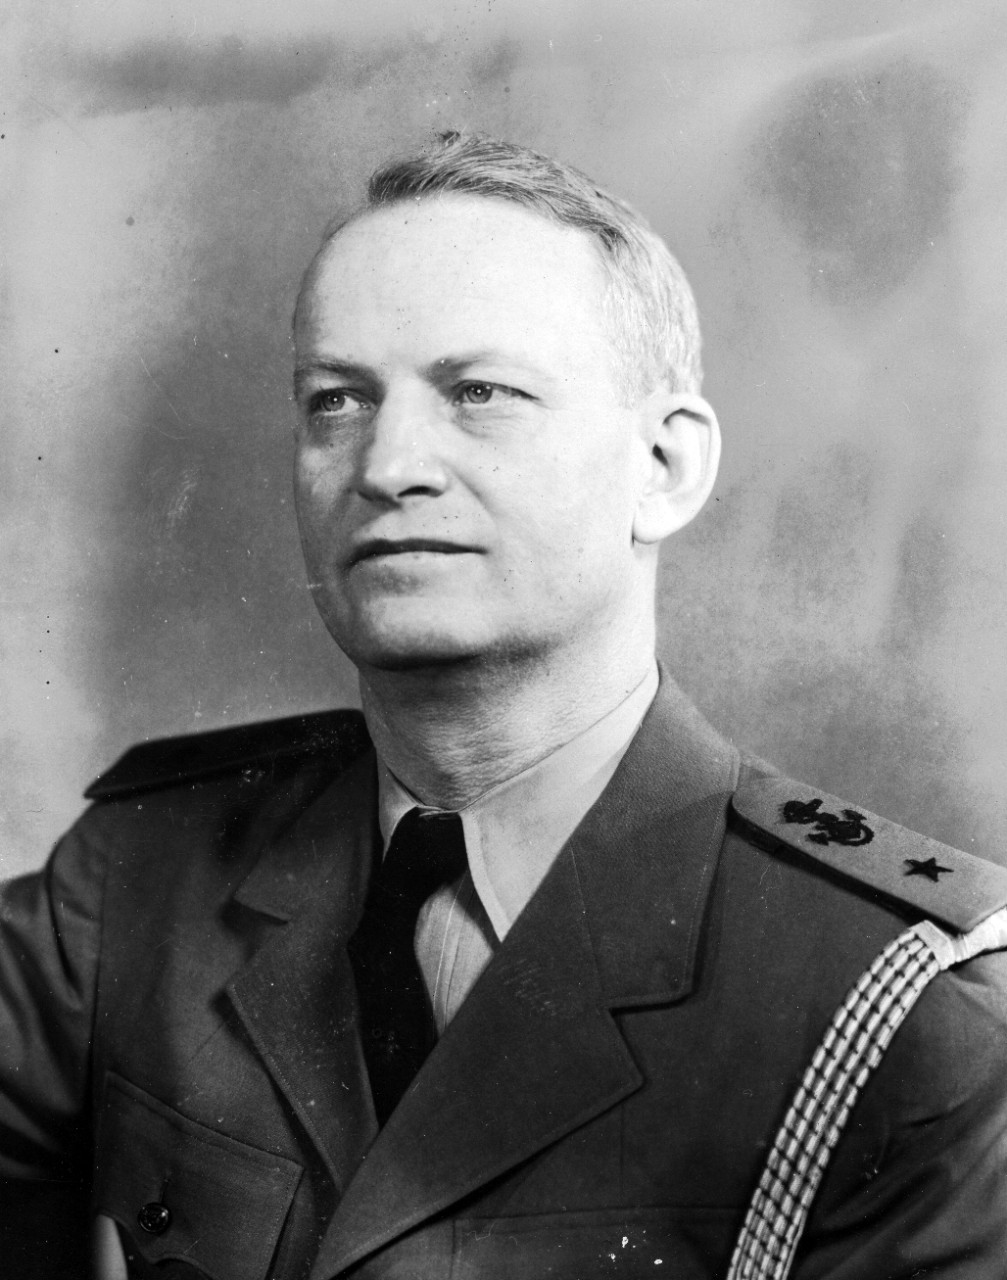 Portrait photo of Admiral Arleigh Burke